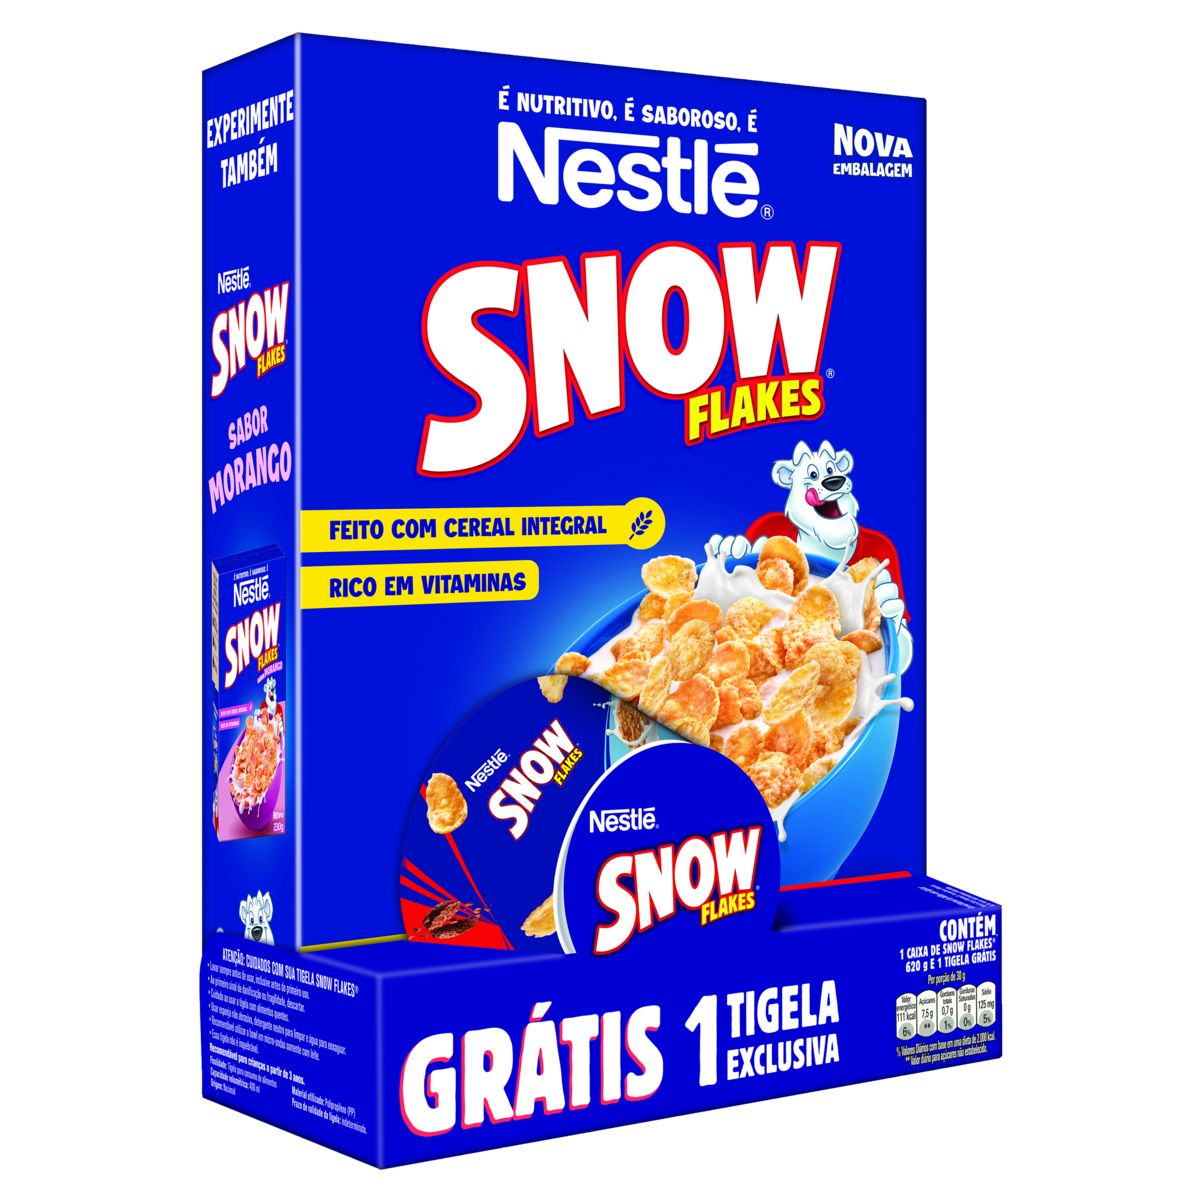 Cereal Matinal Snow Flakes 620g Grátis Tigela Exclusiva